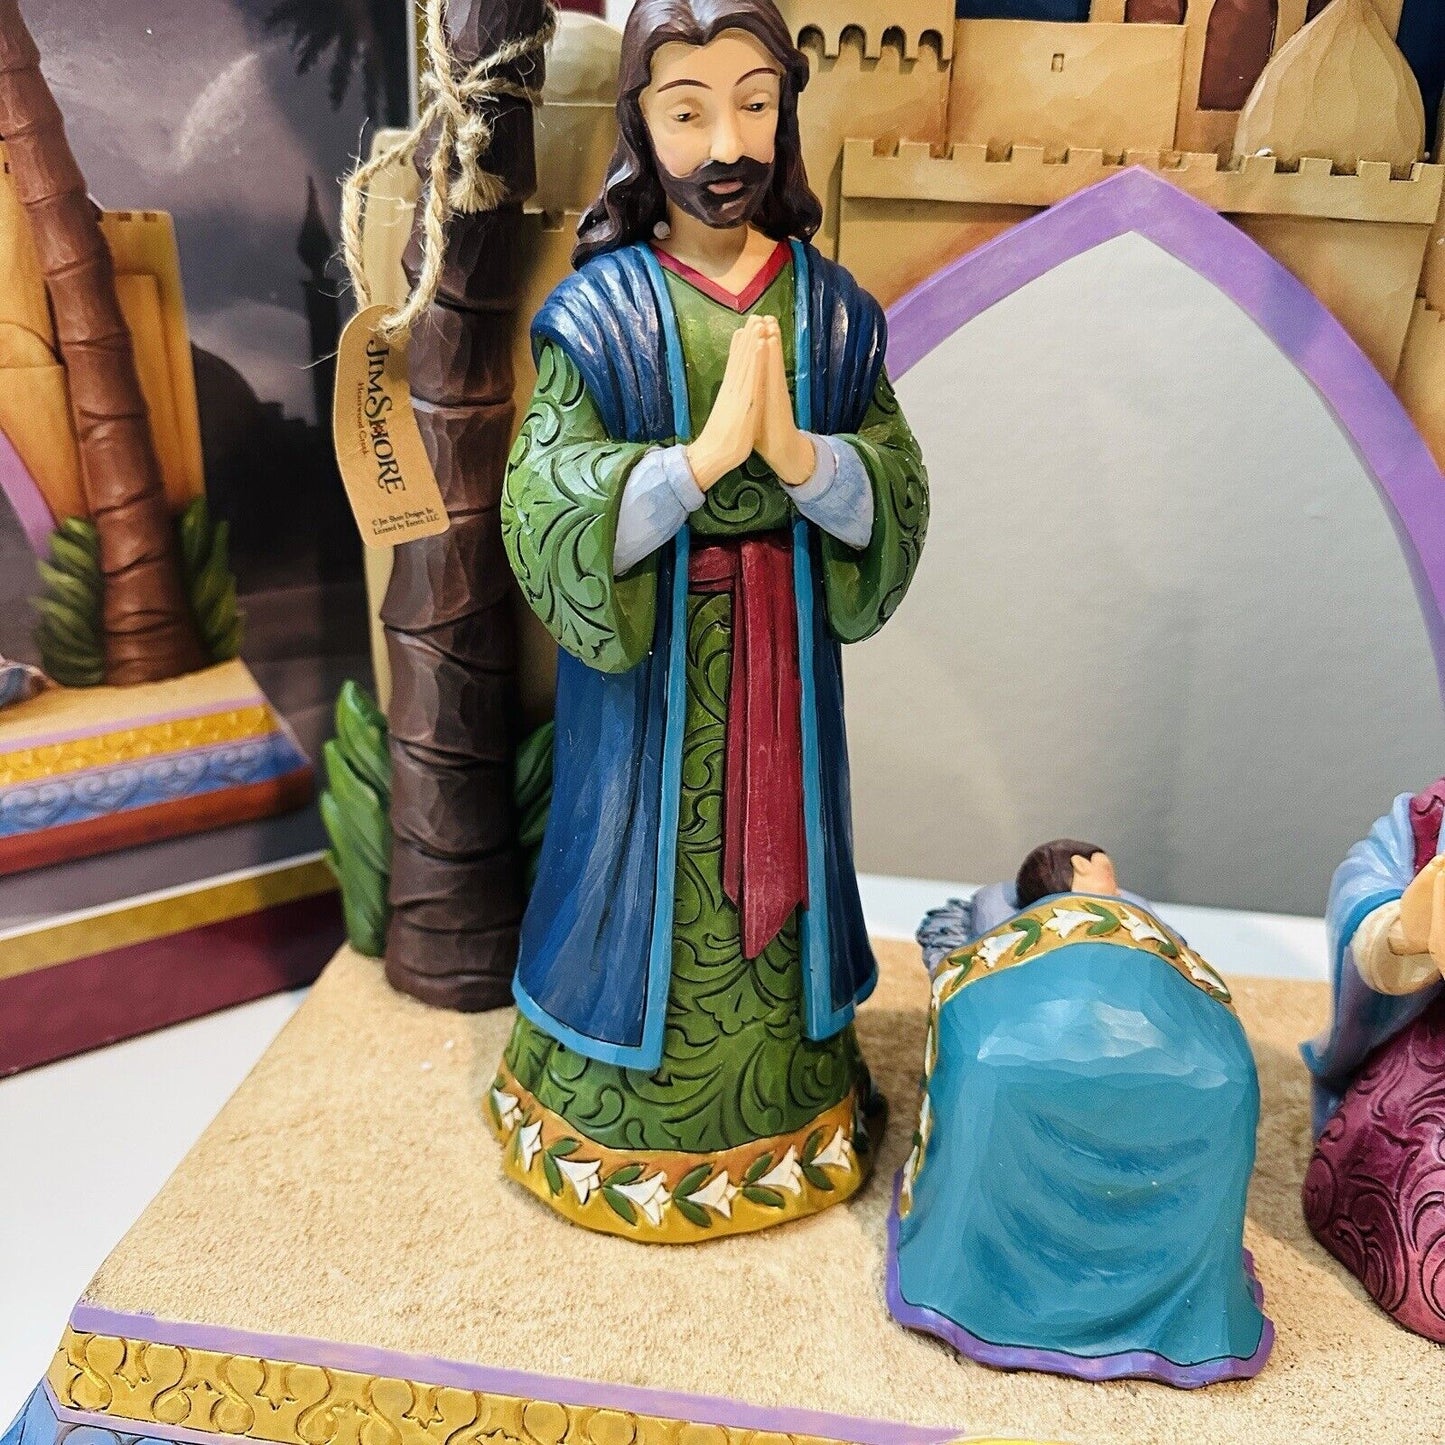 Jim Shore Nativity Scene A Savior Before Us 500/750 Large Christmas Decor Box